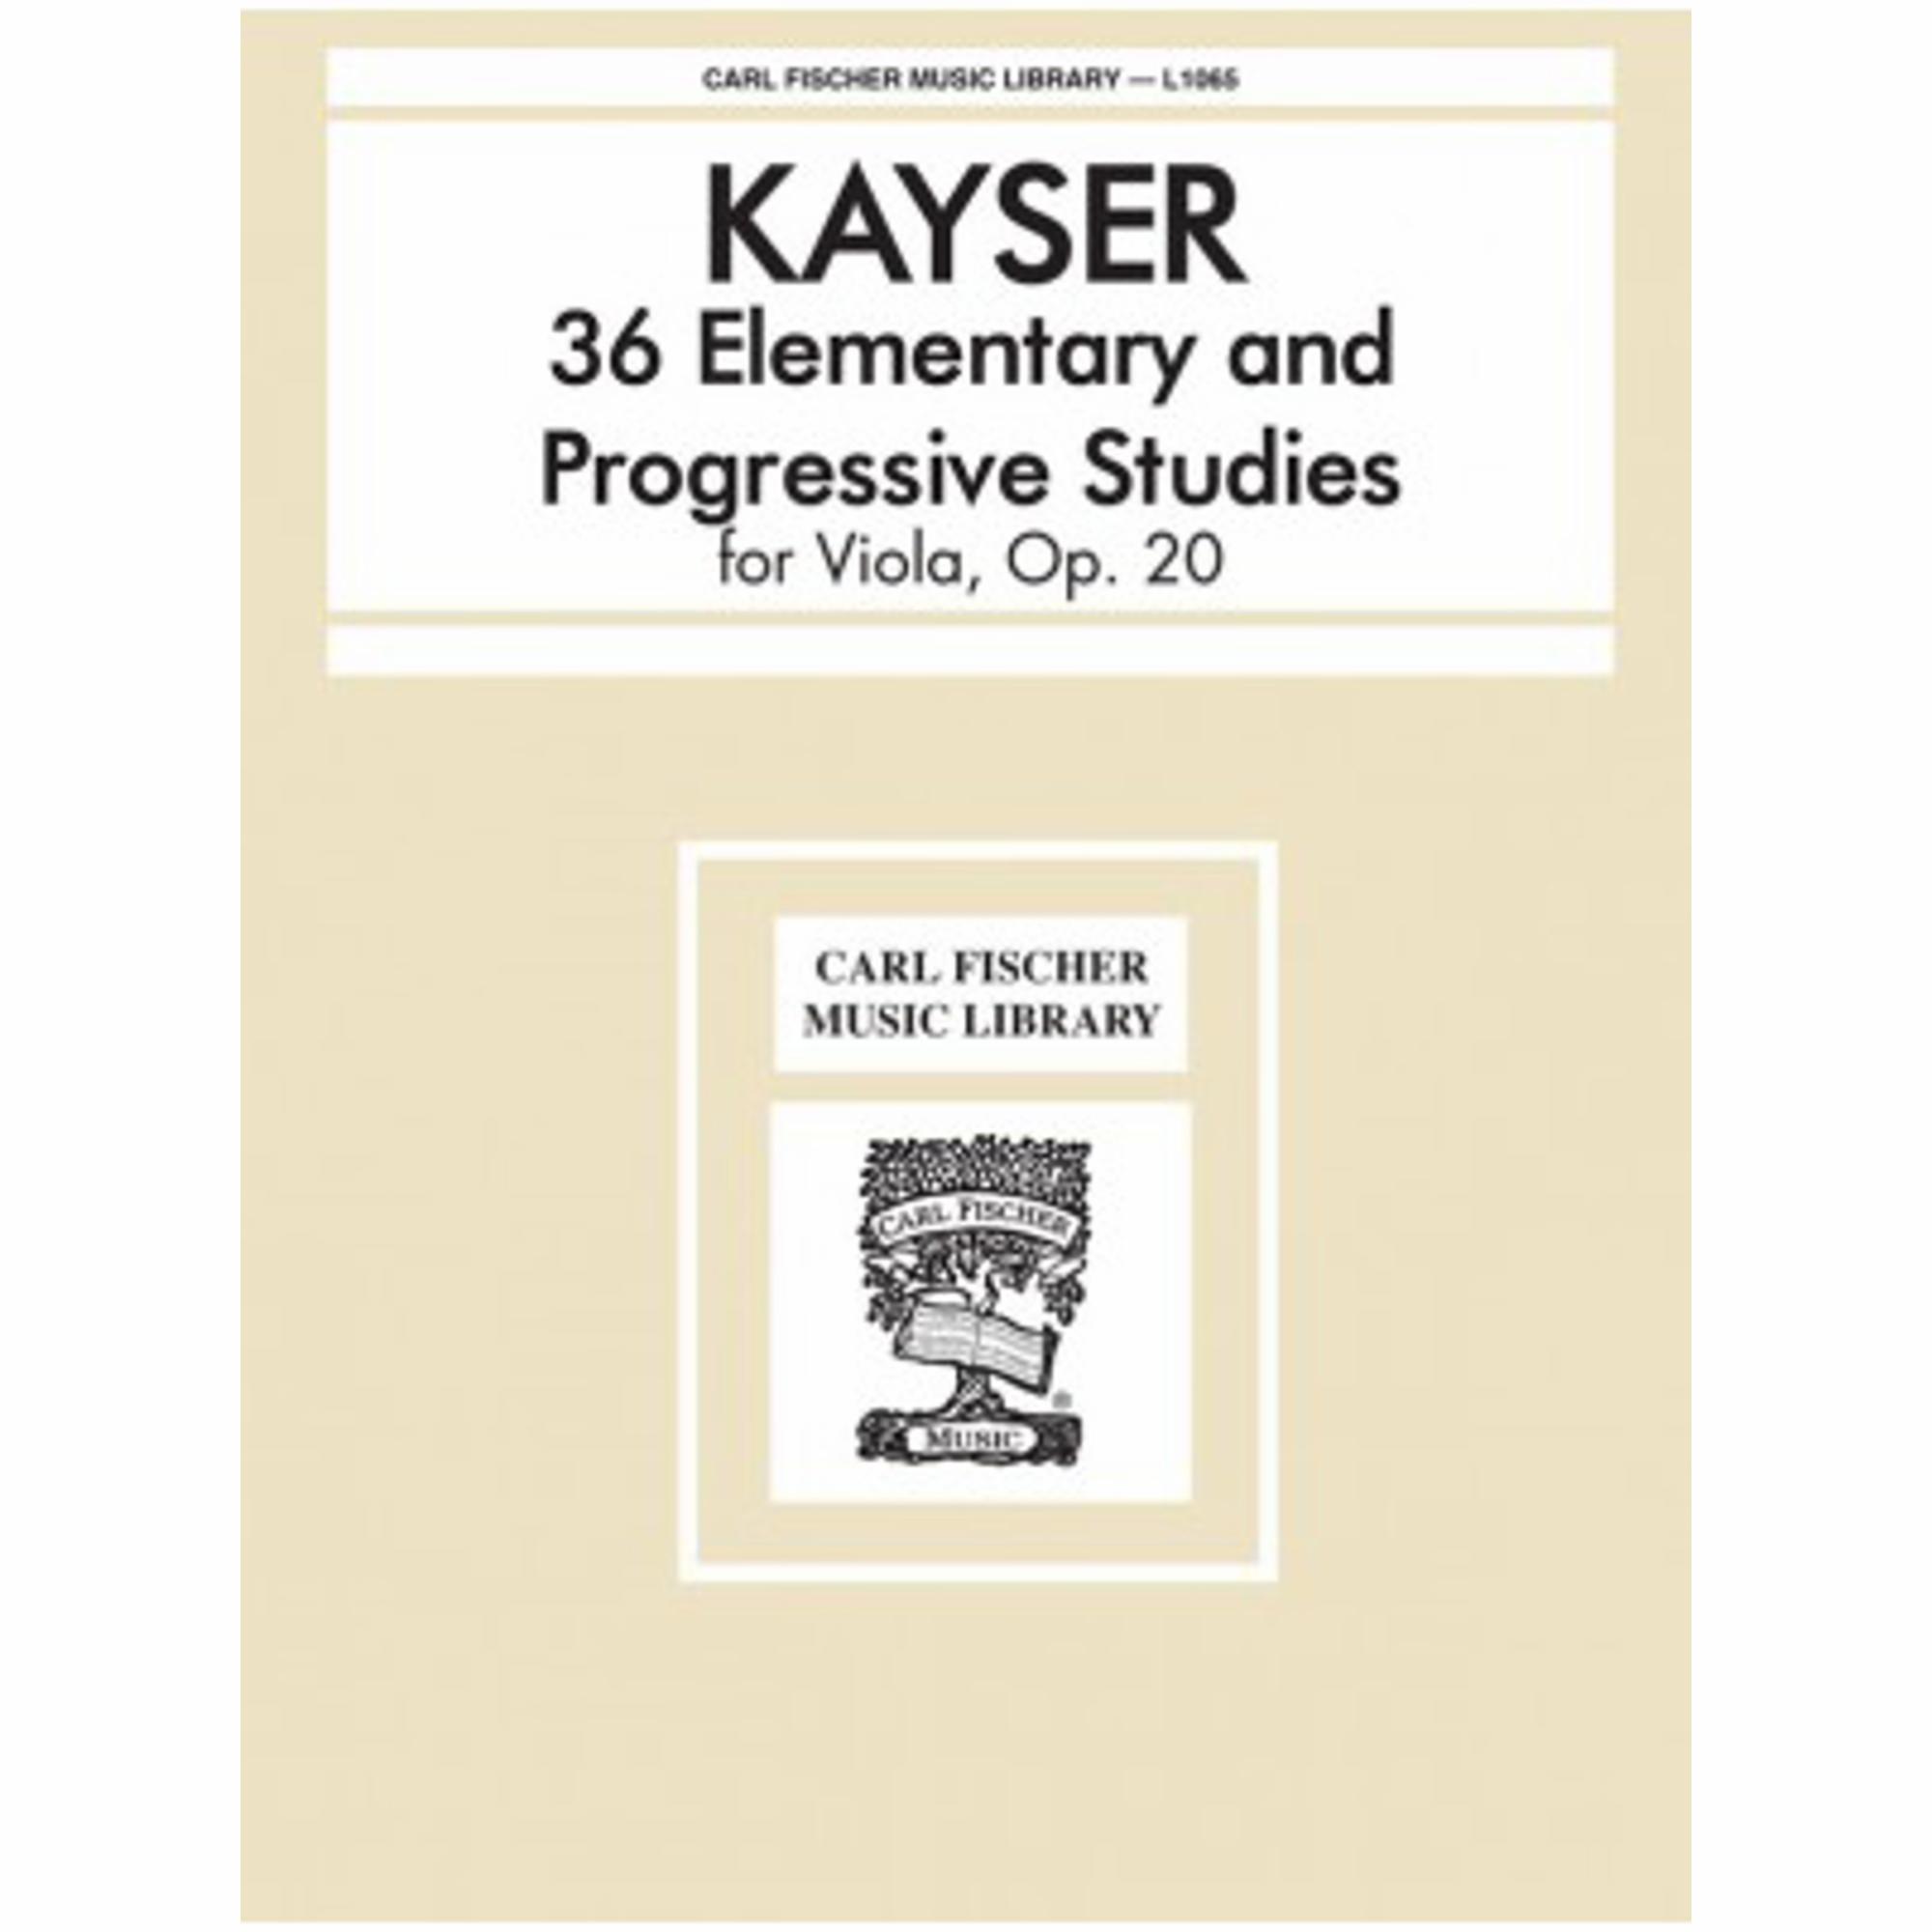 Kayser -- 36 Elementary and Progressive Etudes, Op. 20 for Viola